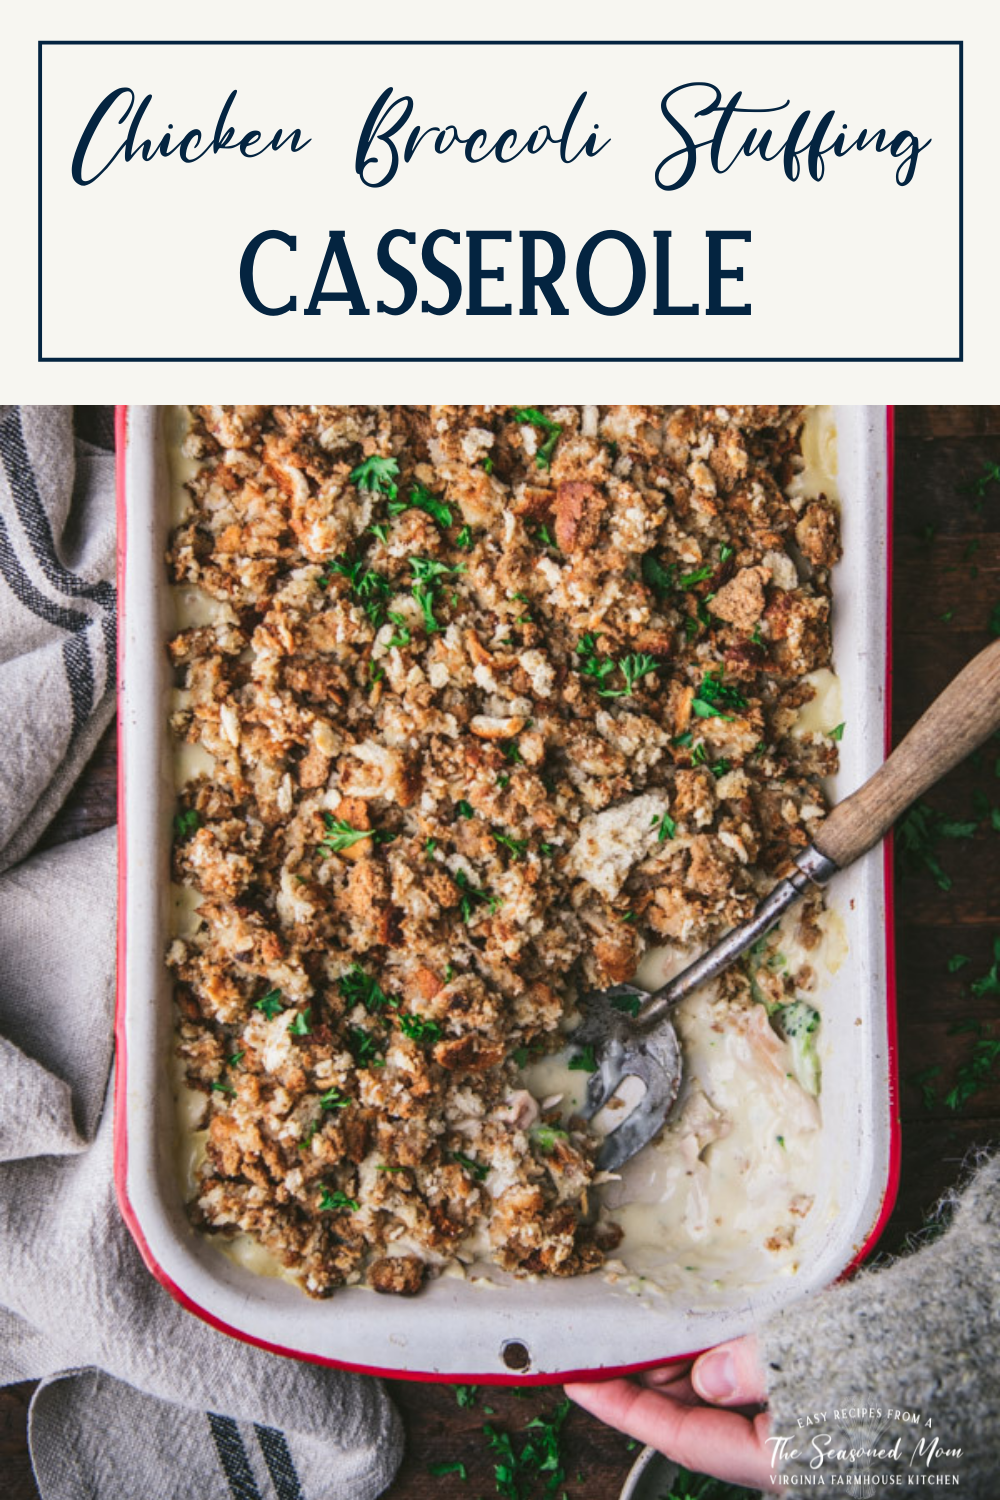 Chicken Broccoli Stuffing Casserole - The Seasoned Mom